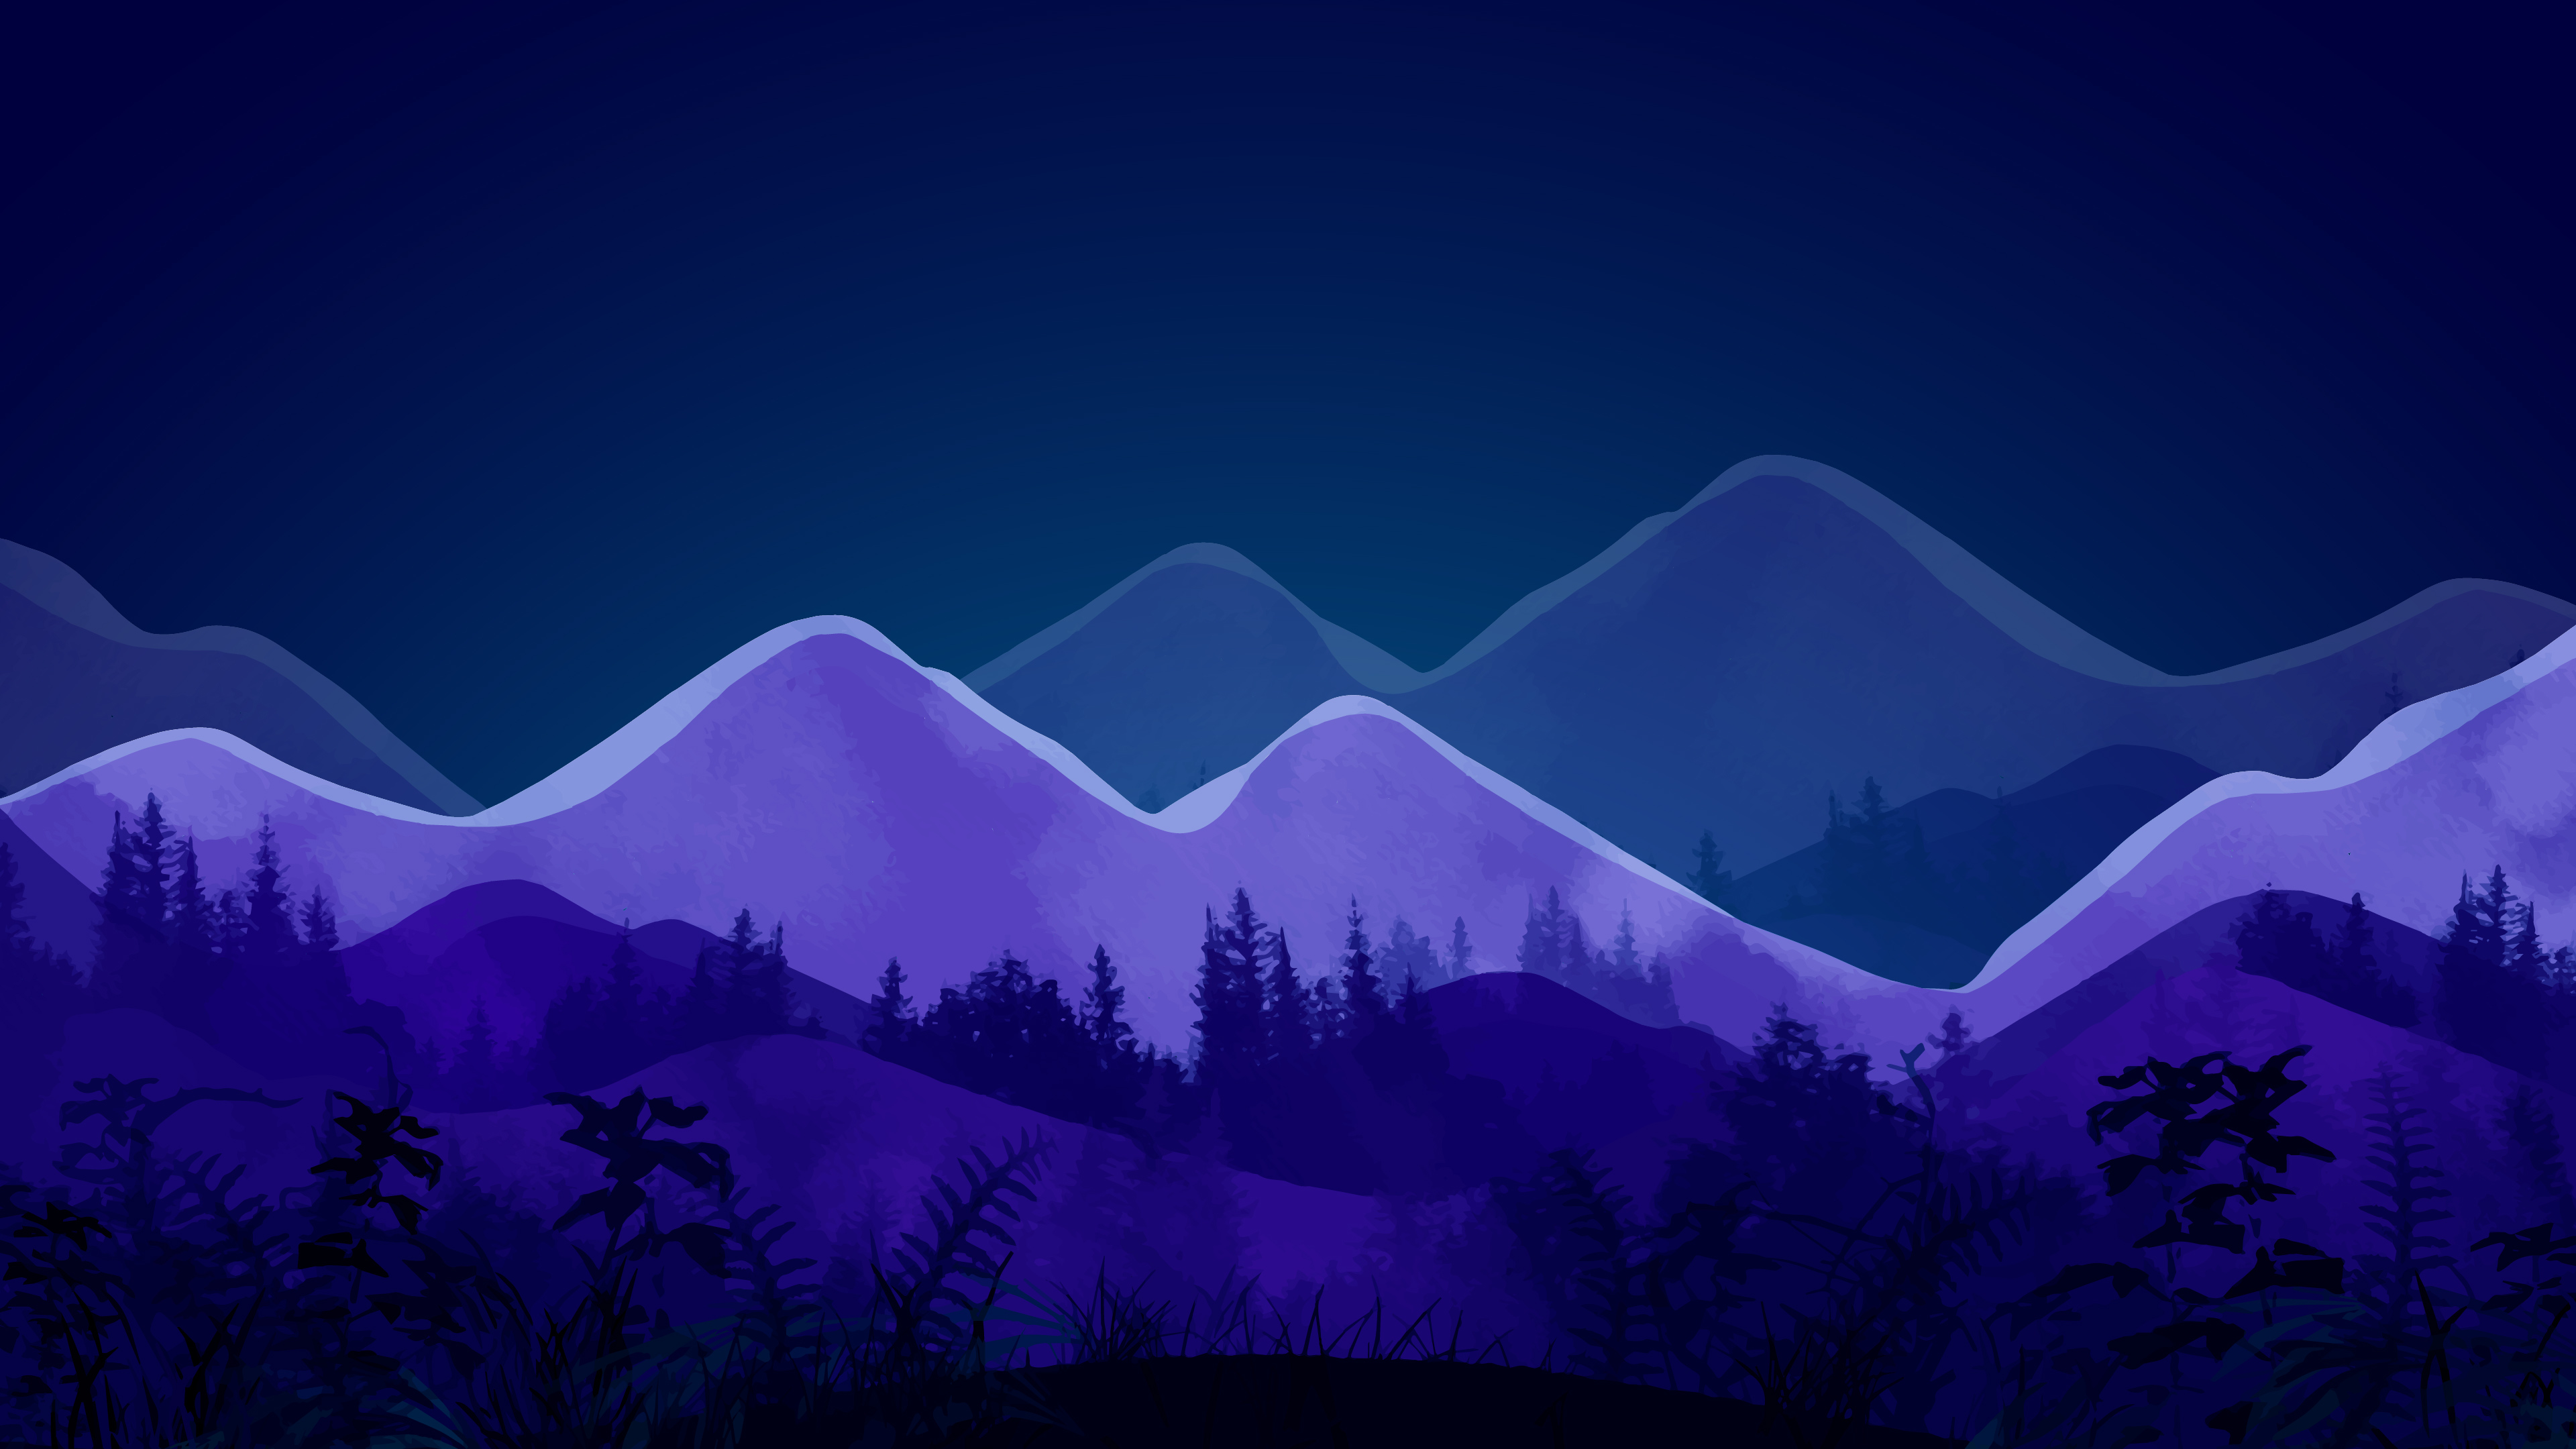 Mountain Minimalist Night Wallpaper, HD Minimalist 4K Wallpapers